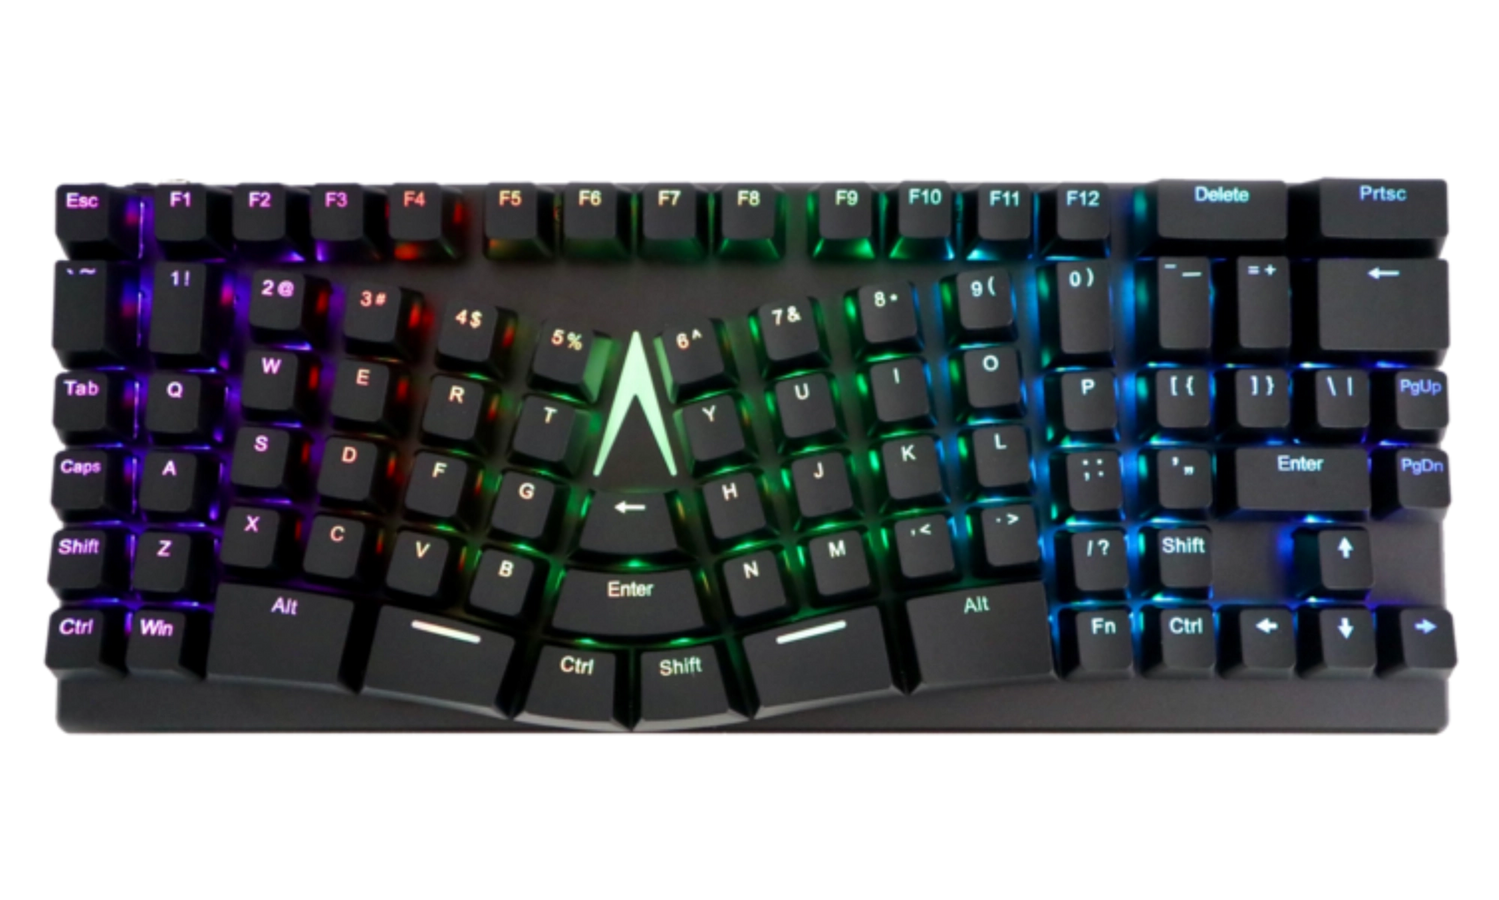 best ergonomic keyboard, product image of a black split keyboard with lighting